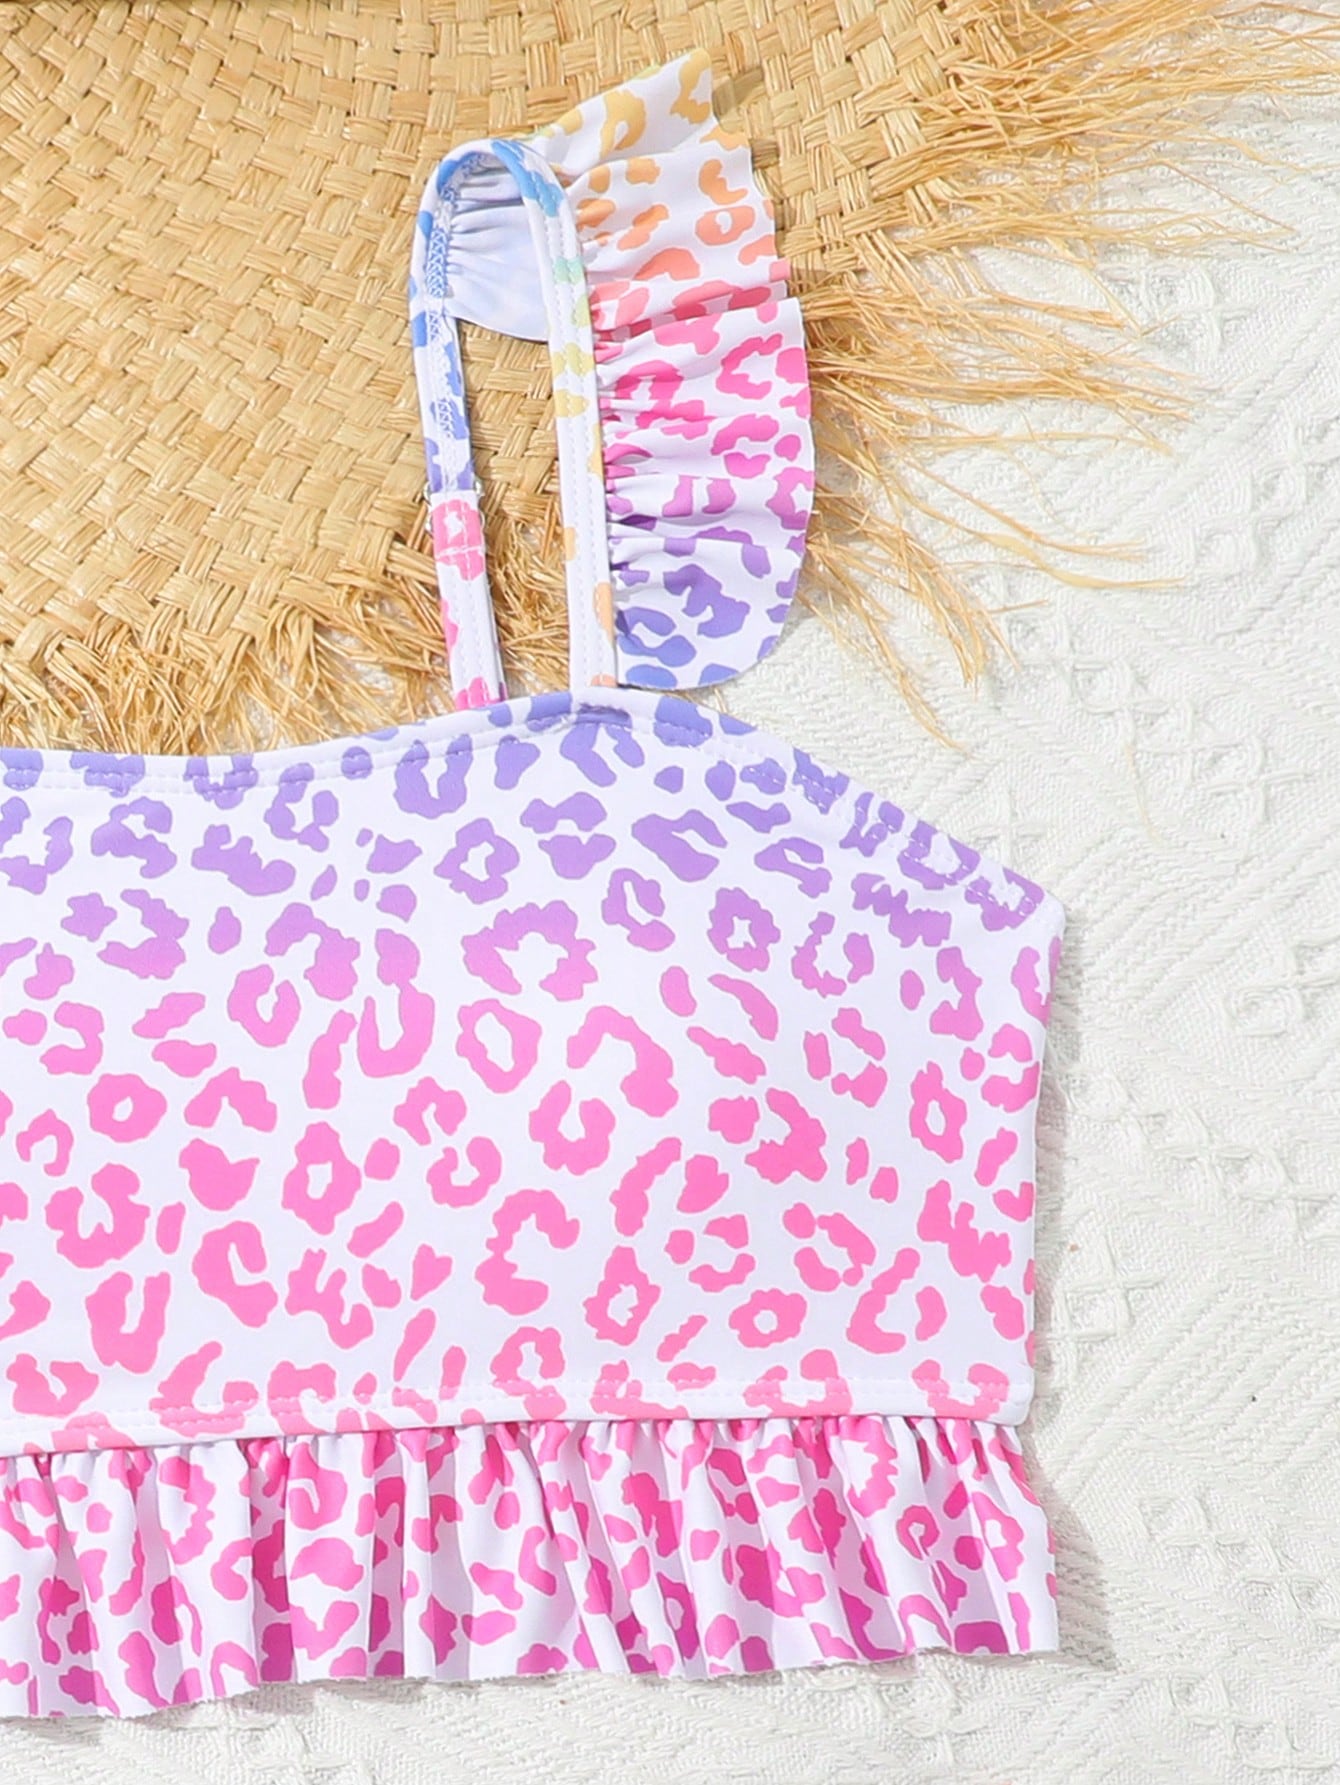 Leopard Print Tween Girl Bikini Set - Ruffle, Wireless, High Stretch, 2 Piece Beachwear